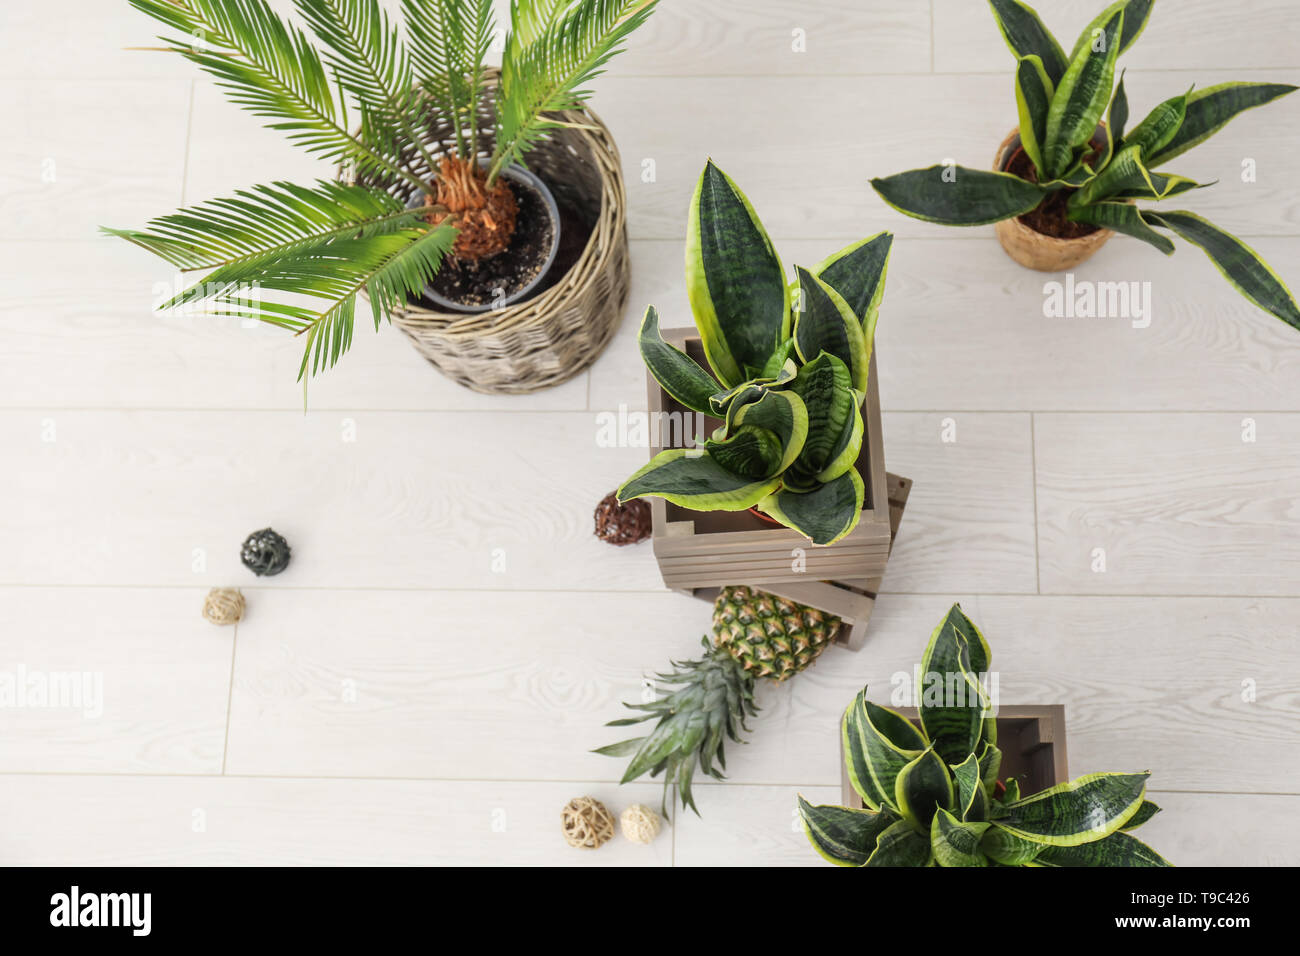 Decorative Sansevieria Plants With Pineapple On Floor Stock Photo